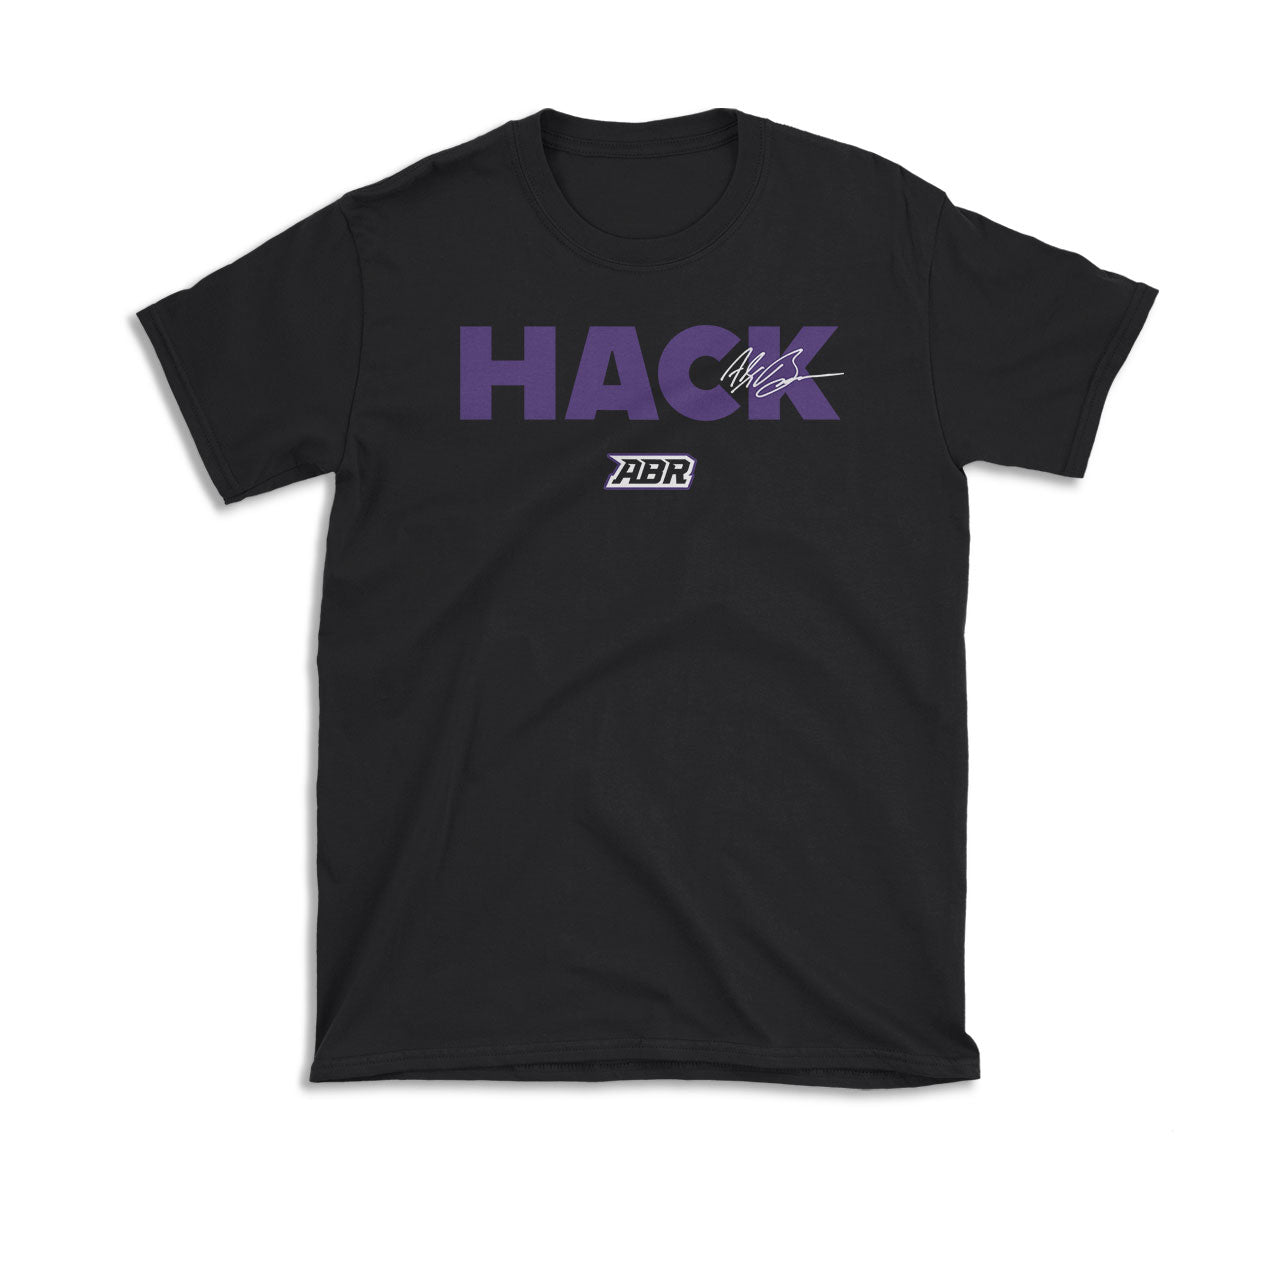 The Original Hack T-Shirt